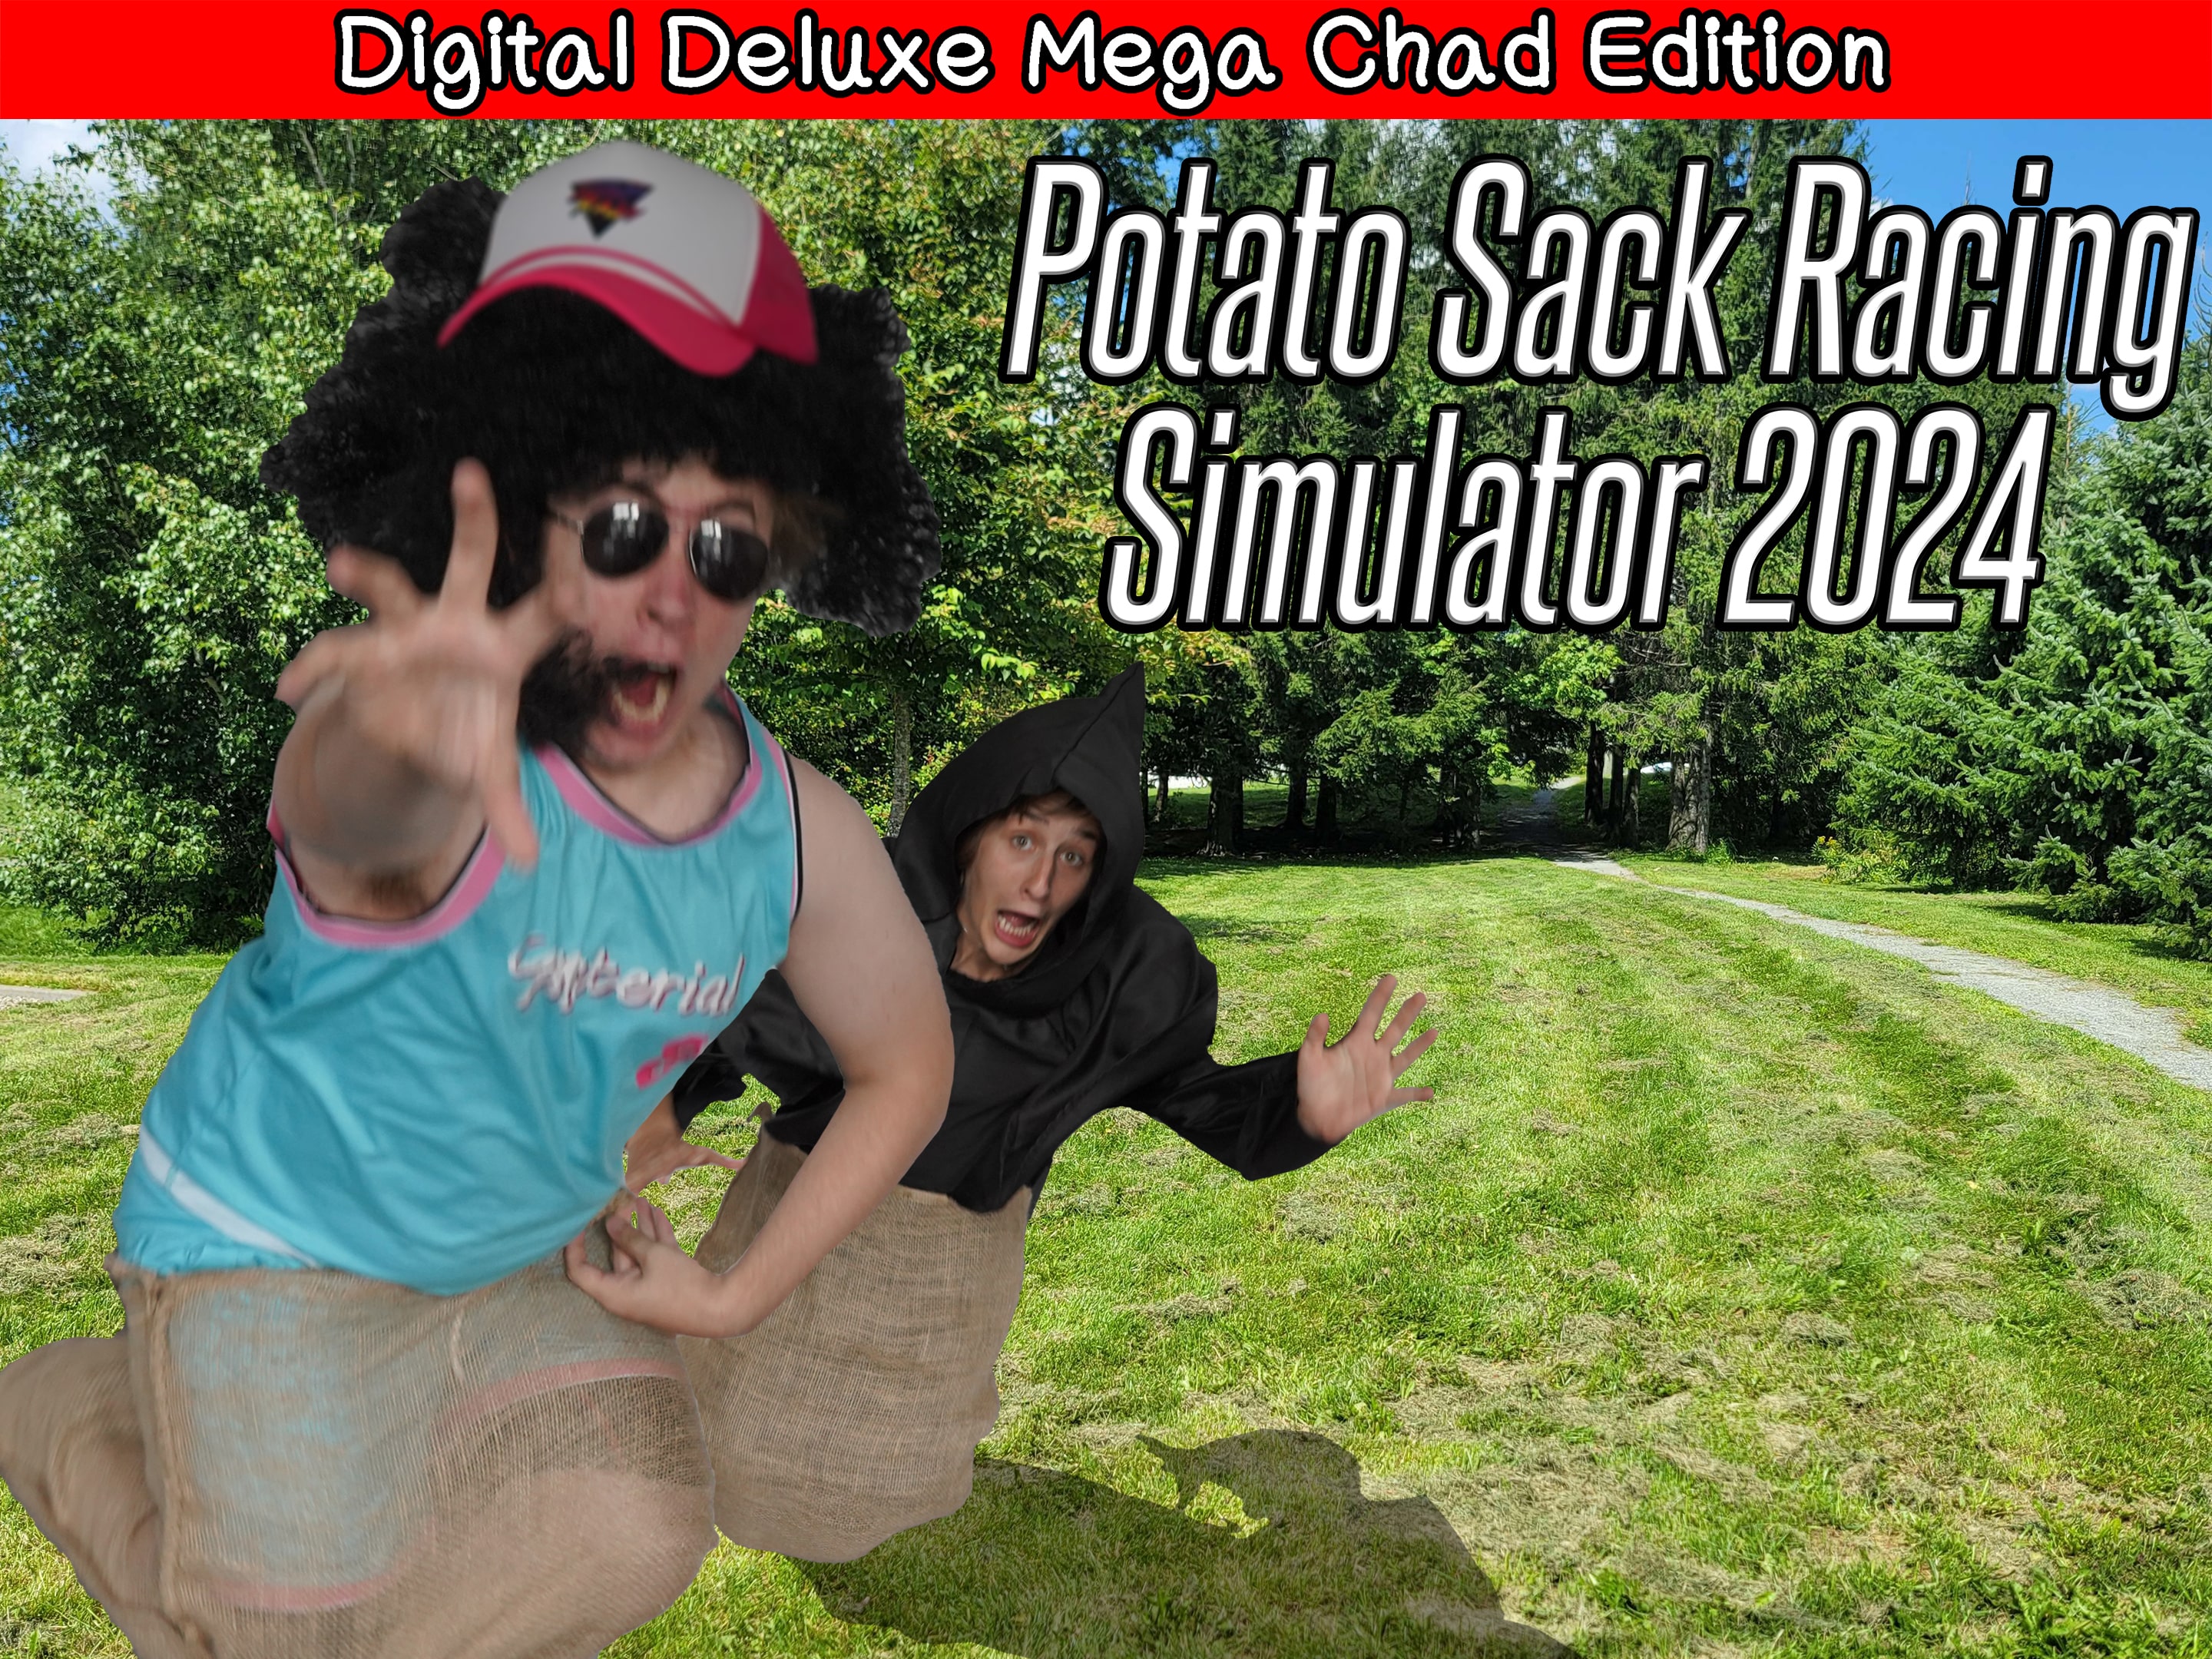 Potato Sack Racing Simulator 2024 : Digital Deluxe Mega Chad Edition